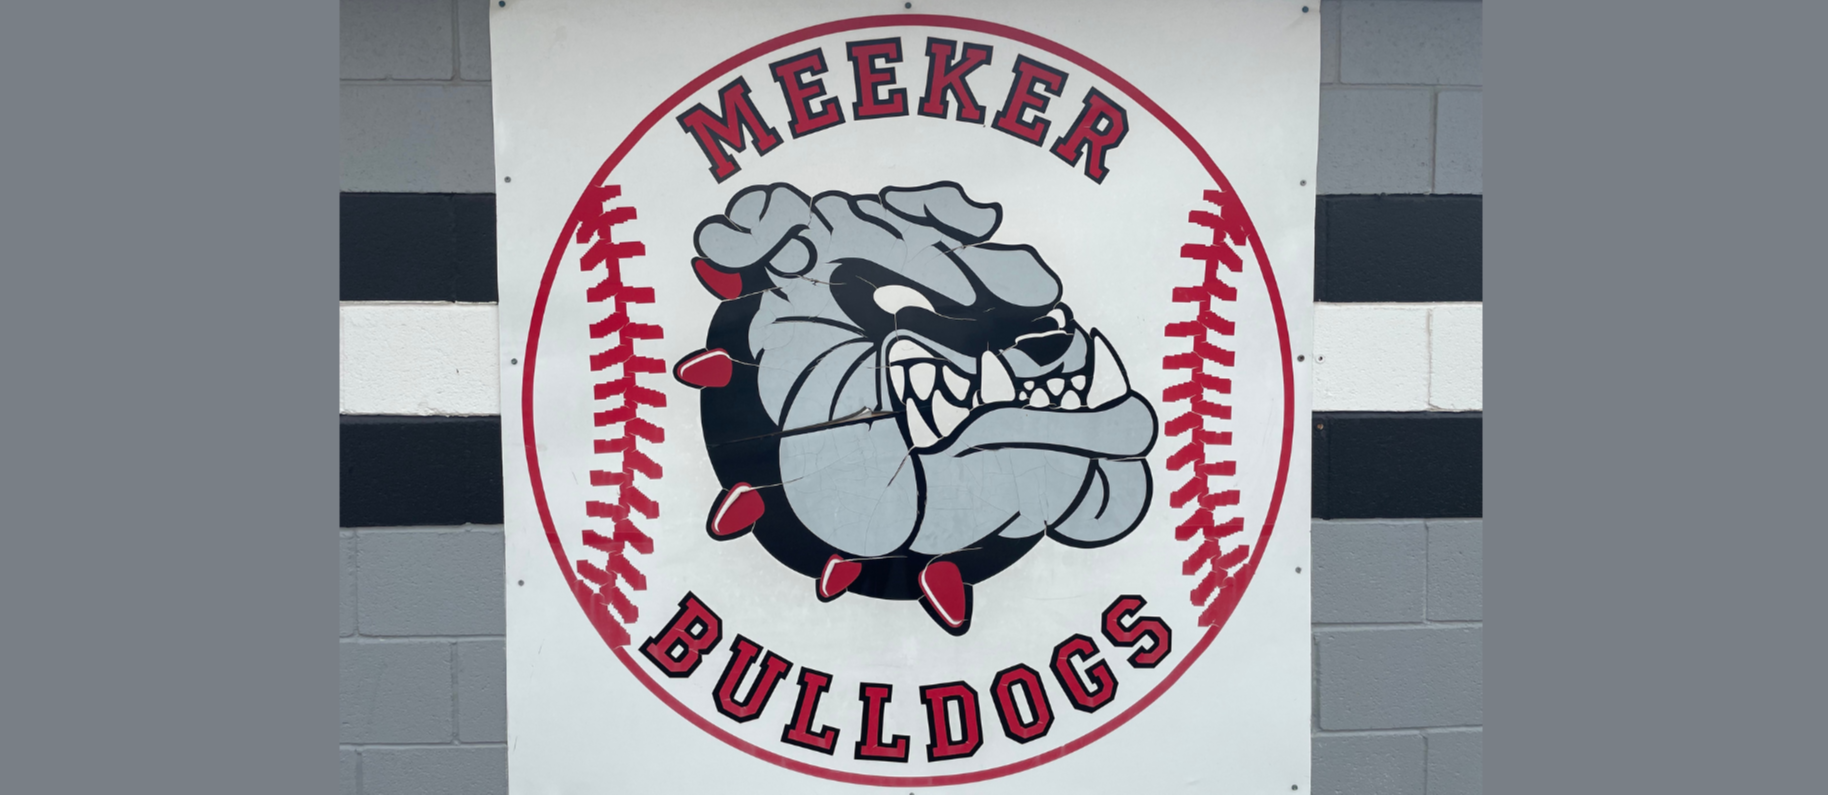 Meeker Bulldog sign in a hallway